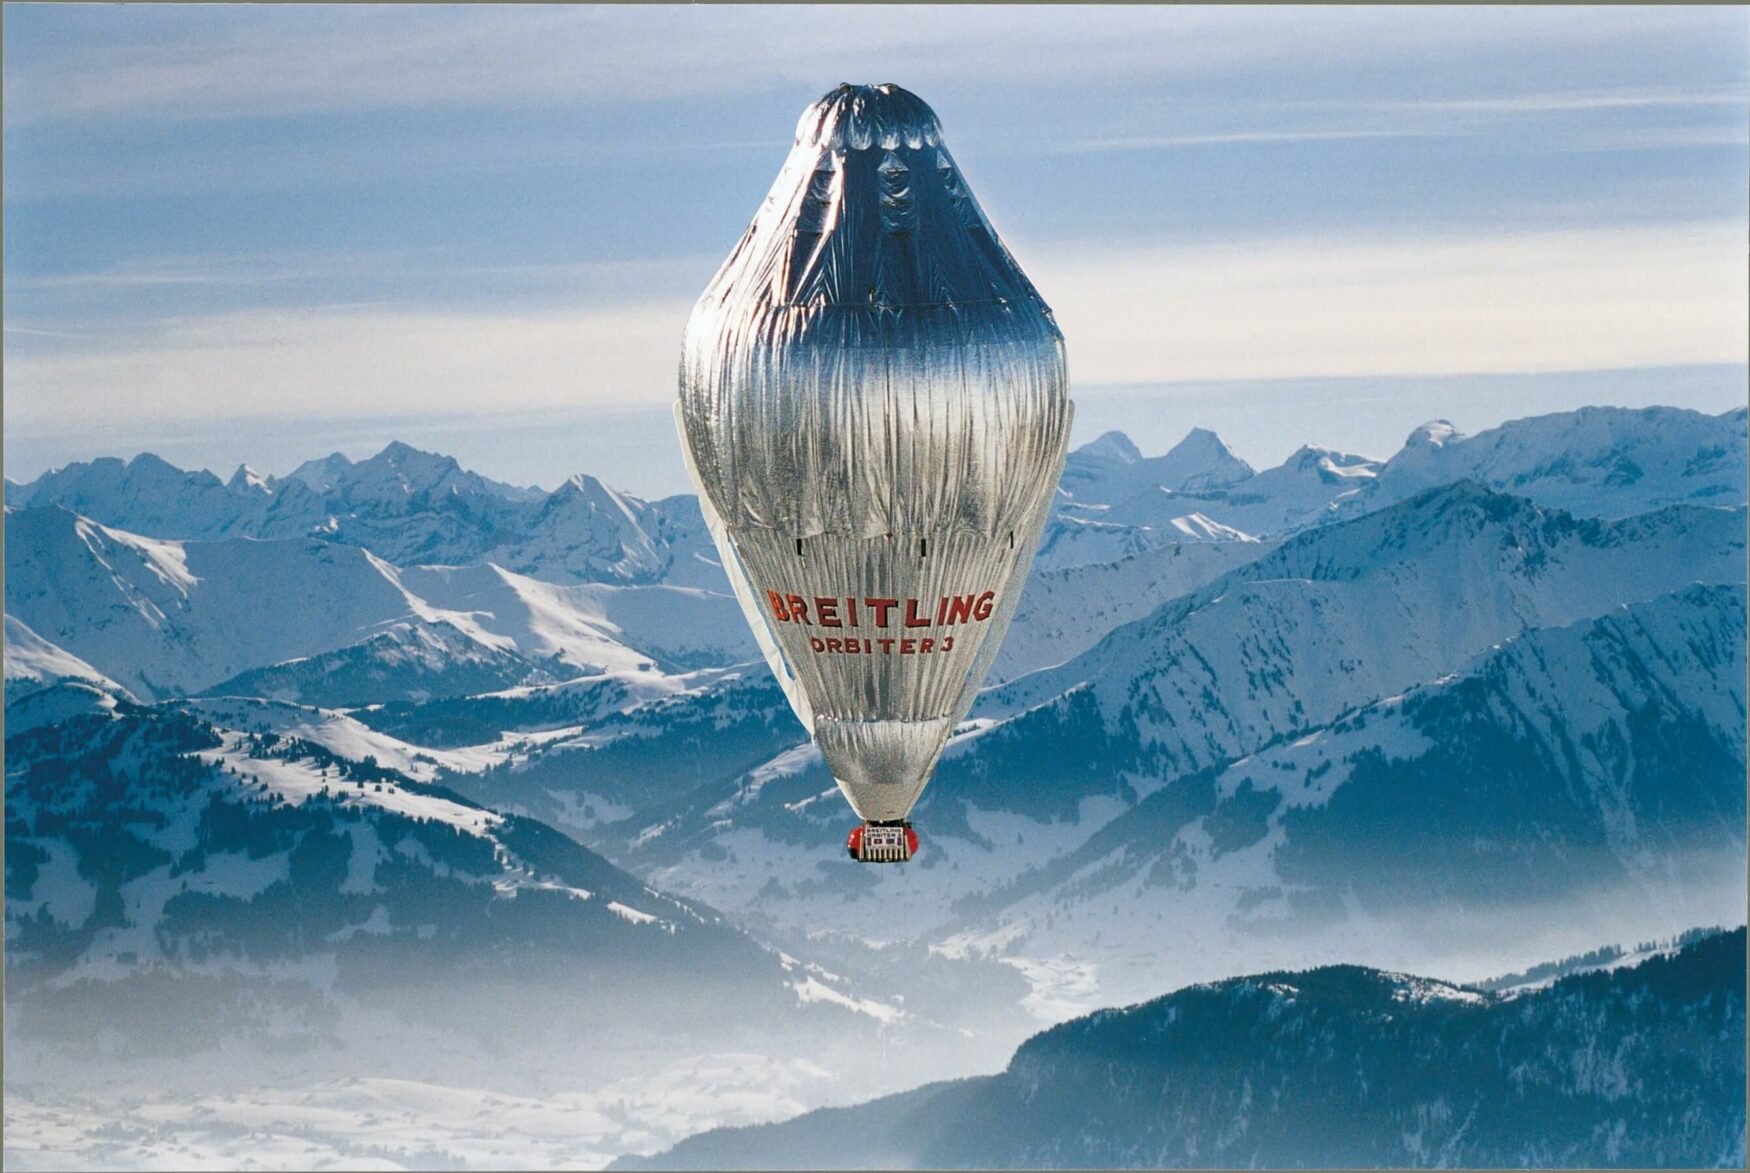 The Breitling Orbiter 3 balloon